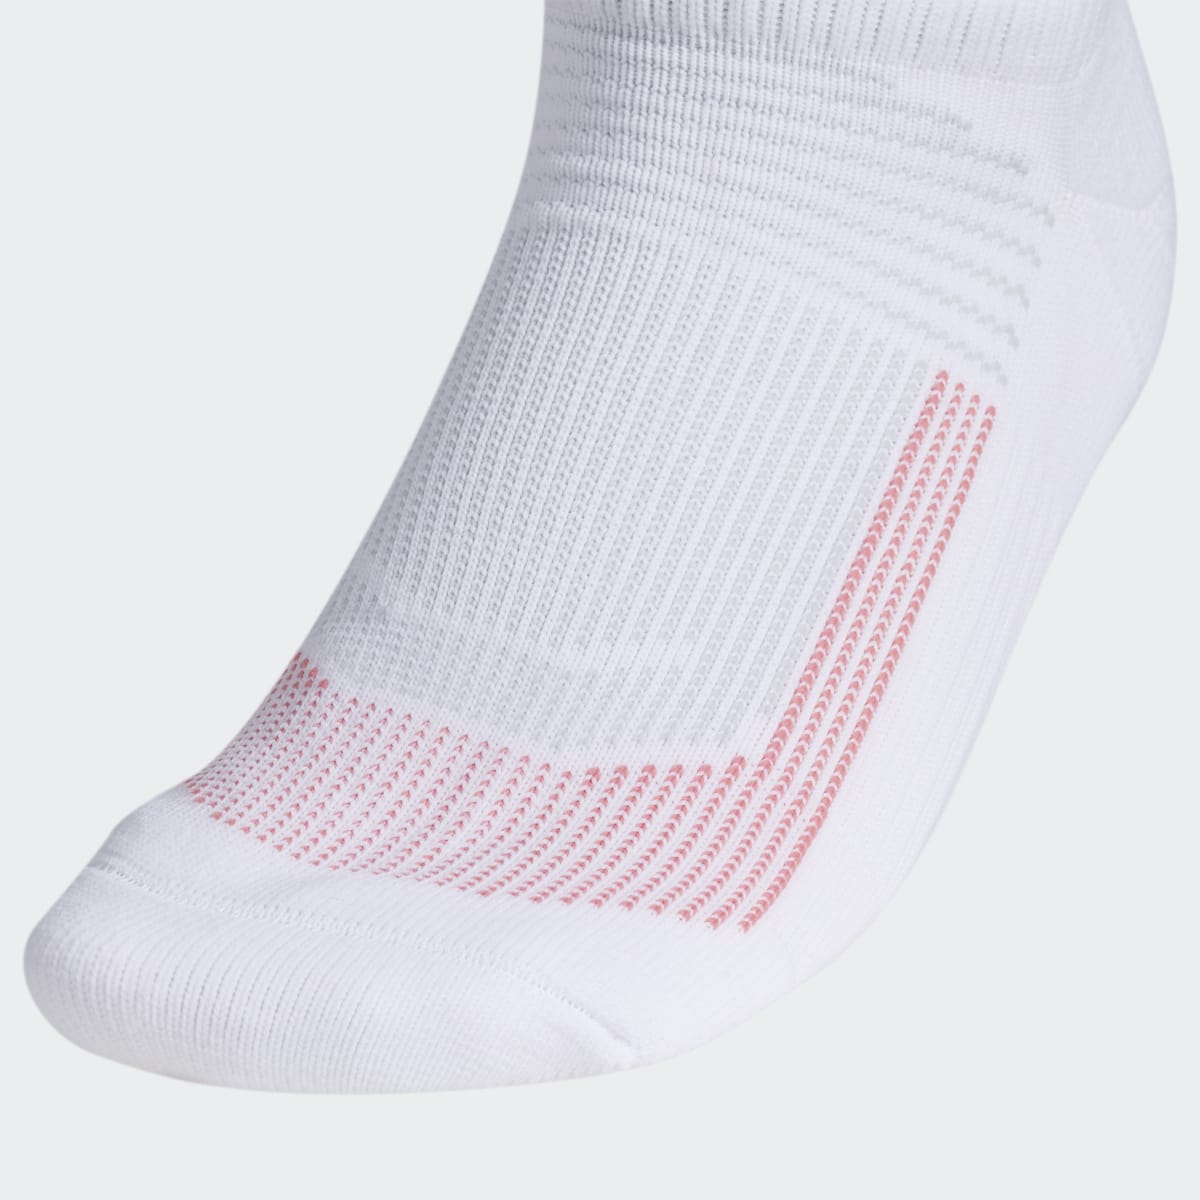 Adidas Superlite Ultraboost Tabbed No-Show Socks 2 Pairs. 4